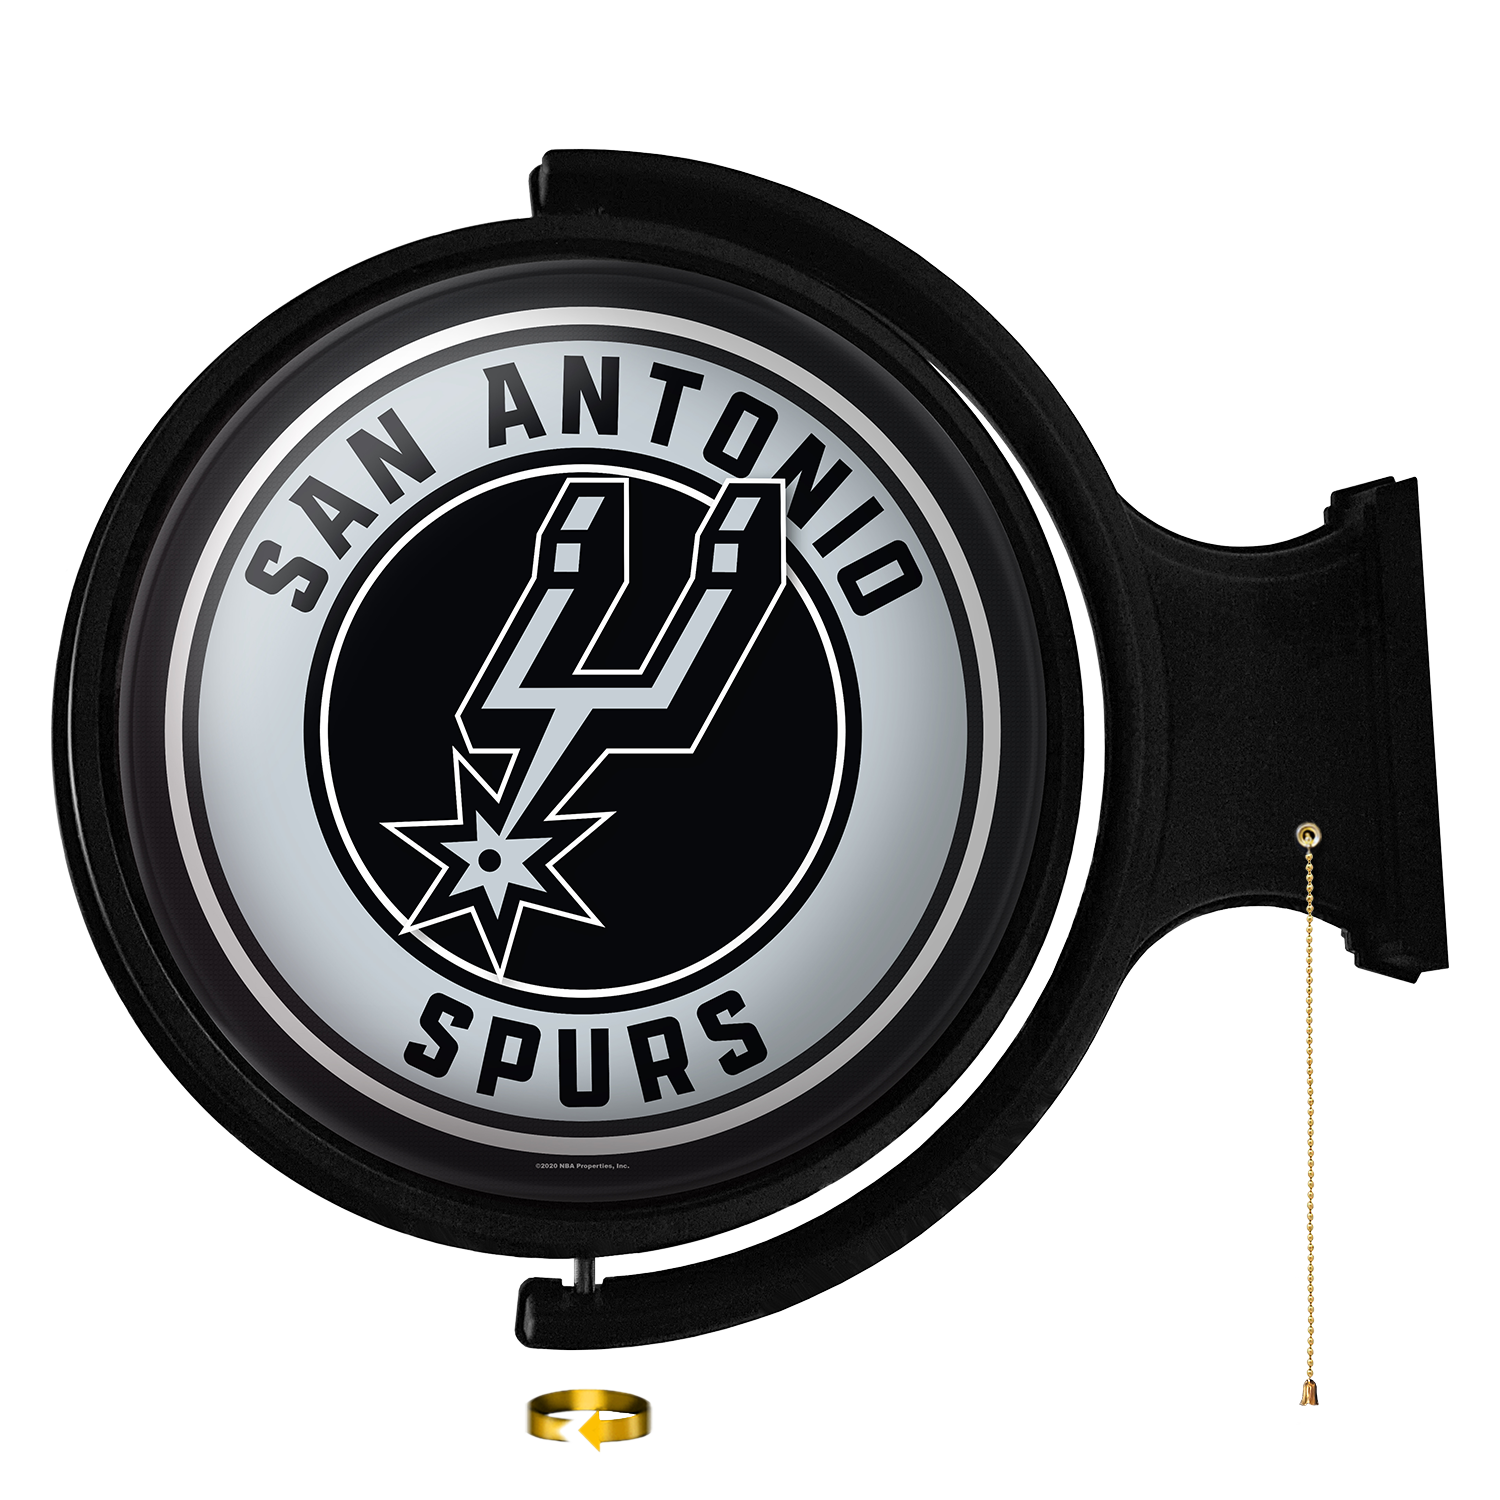 San Antonio Spurs Round Rotating Wall Sign